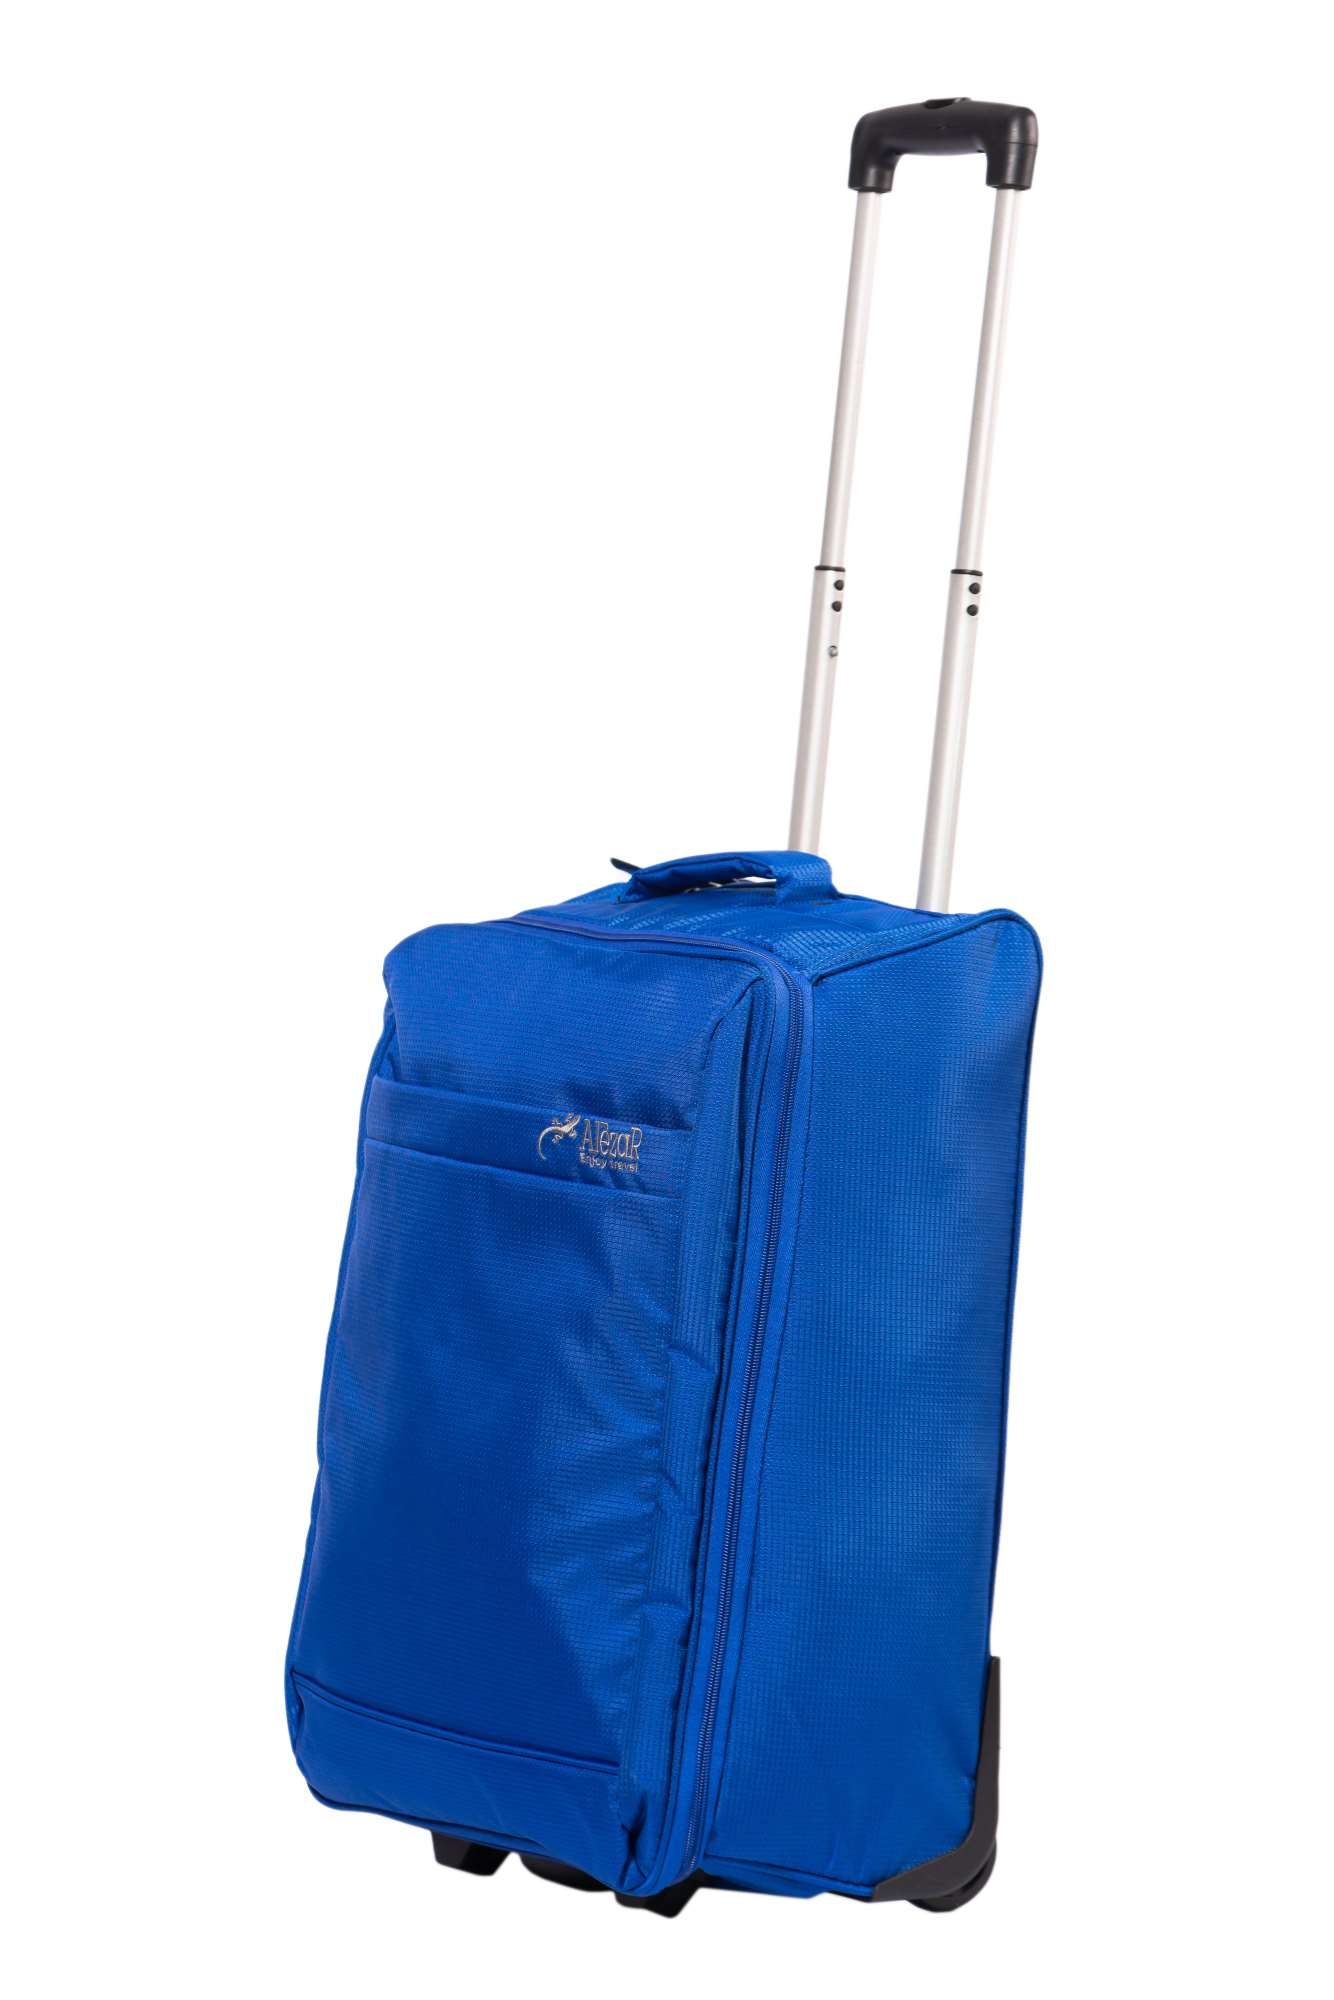 Alezar Cabin Size Travel Bag Blue 22